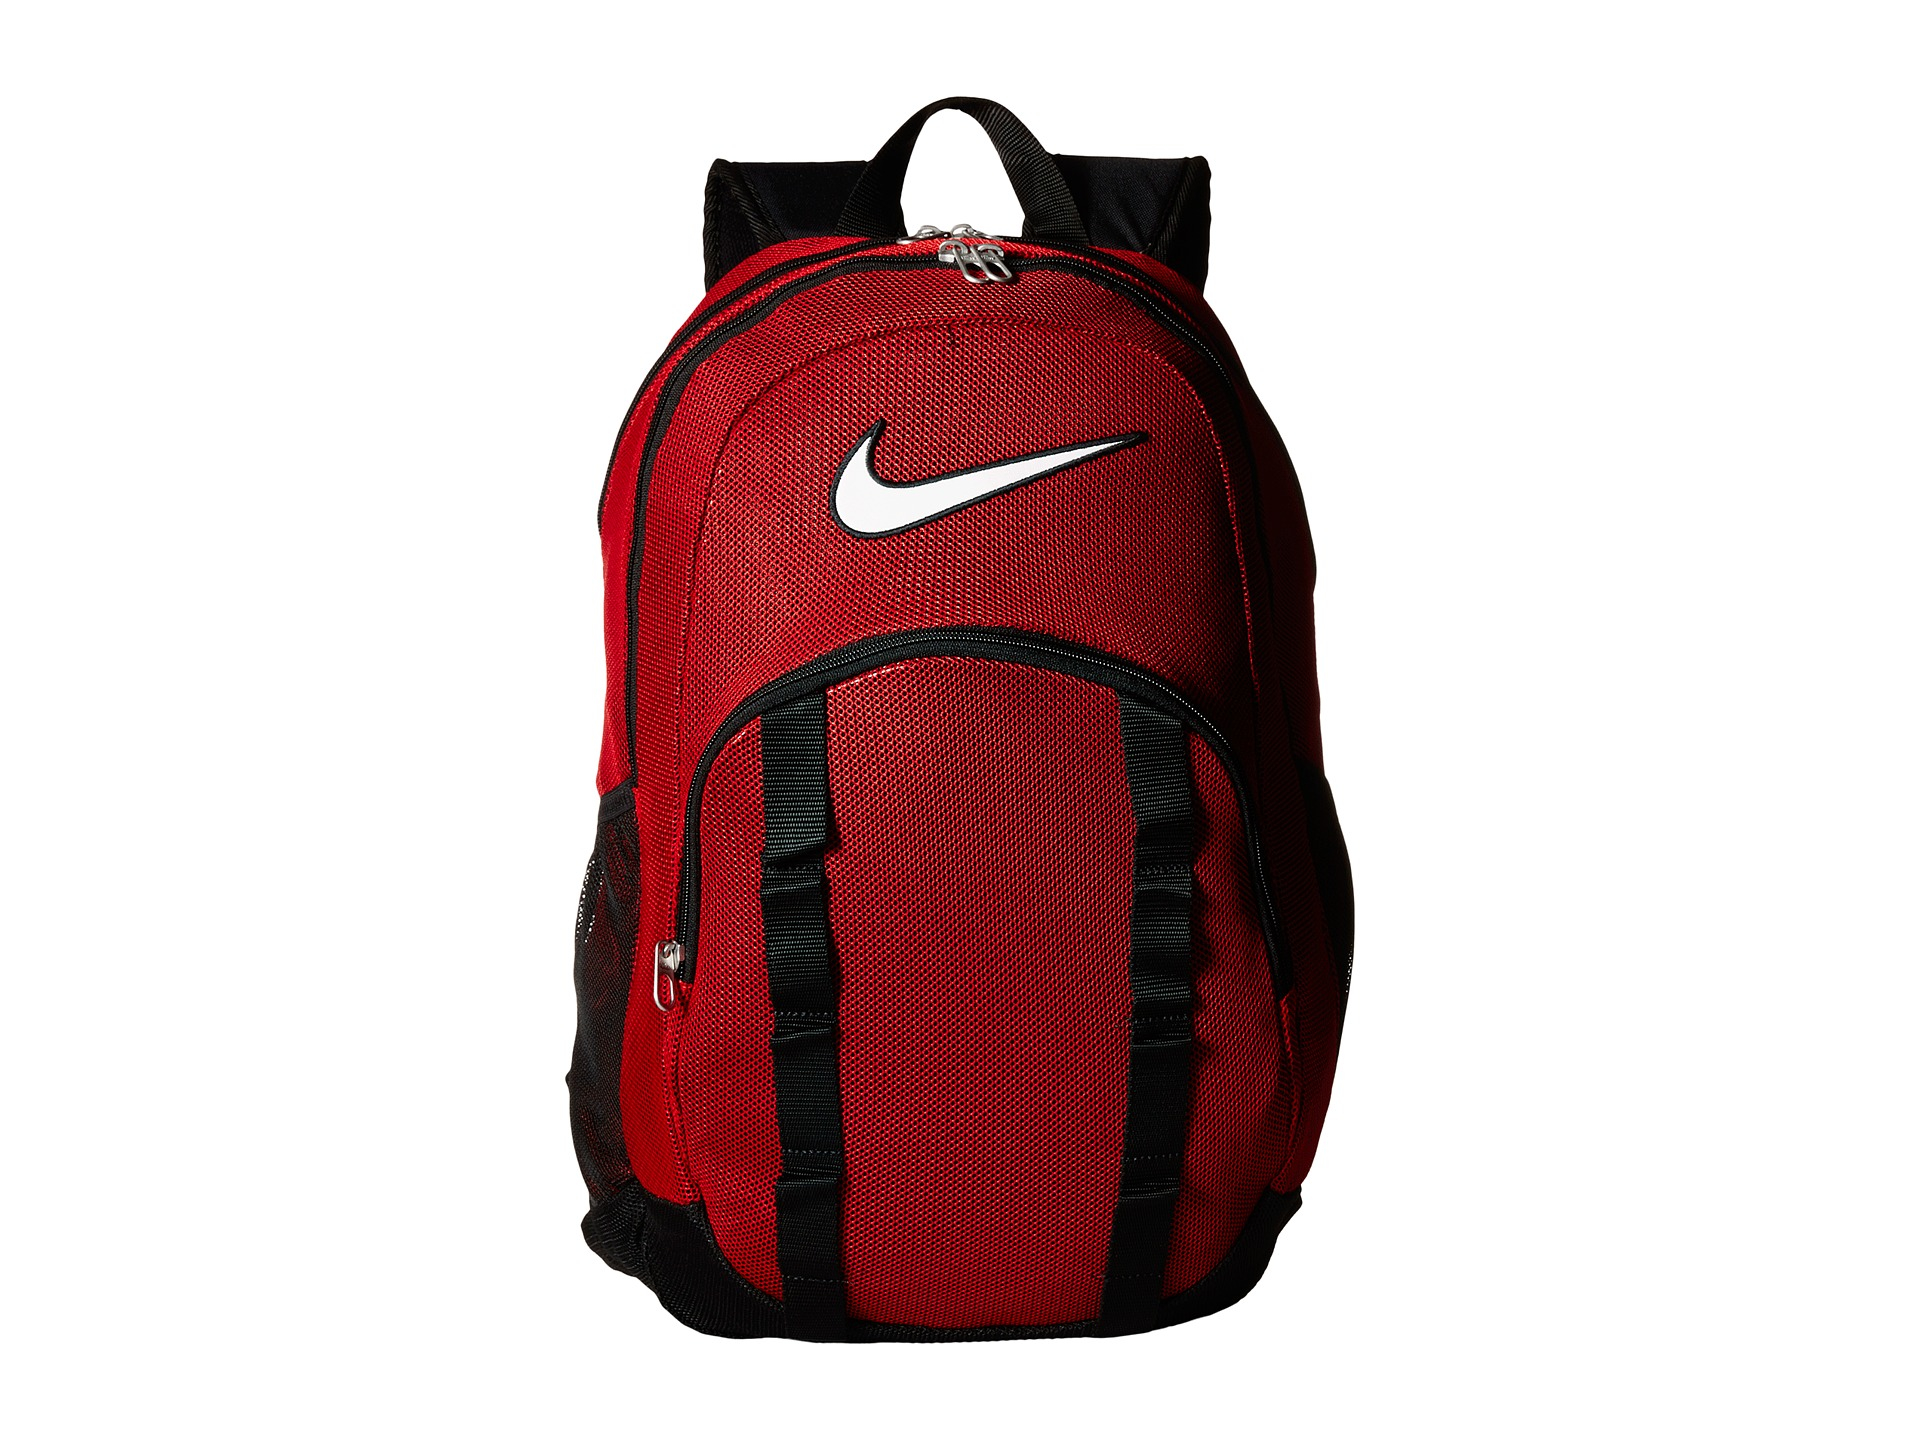 Lyst - Nike Brasilia 7 Backpack Mesh Xl in Red for Men